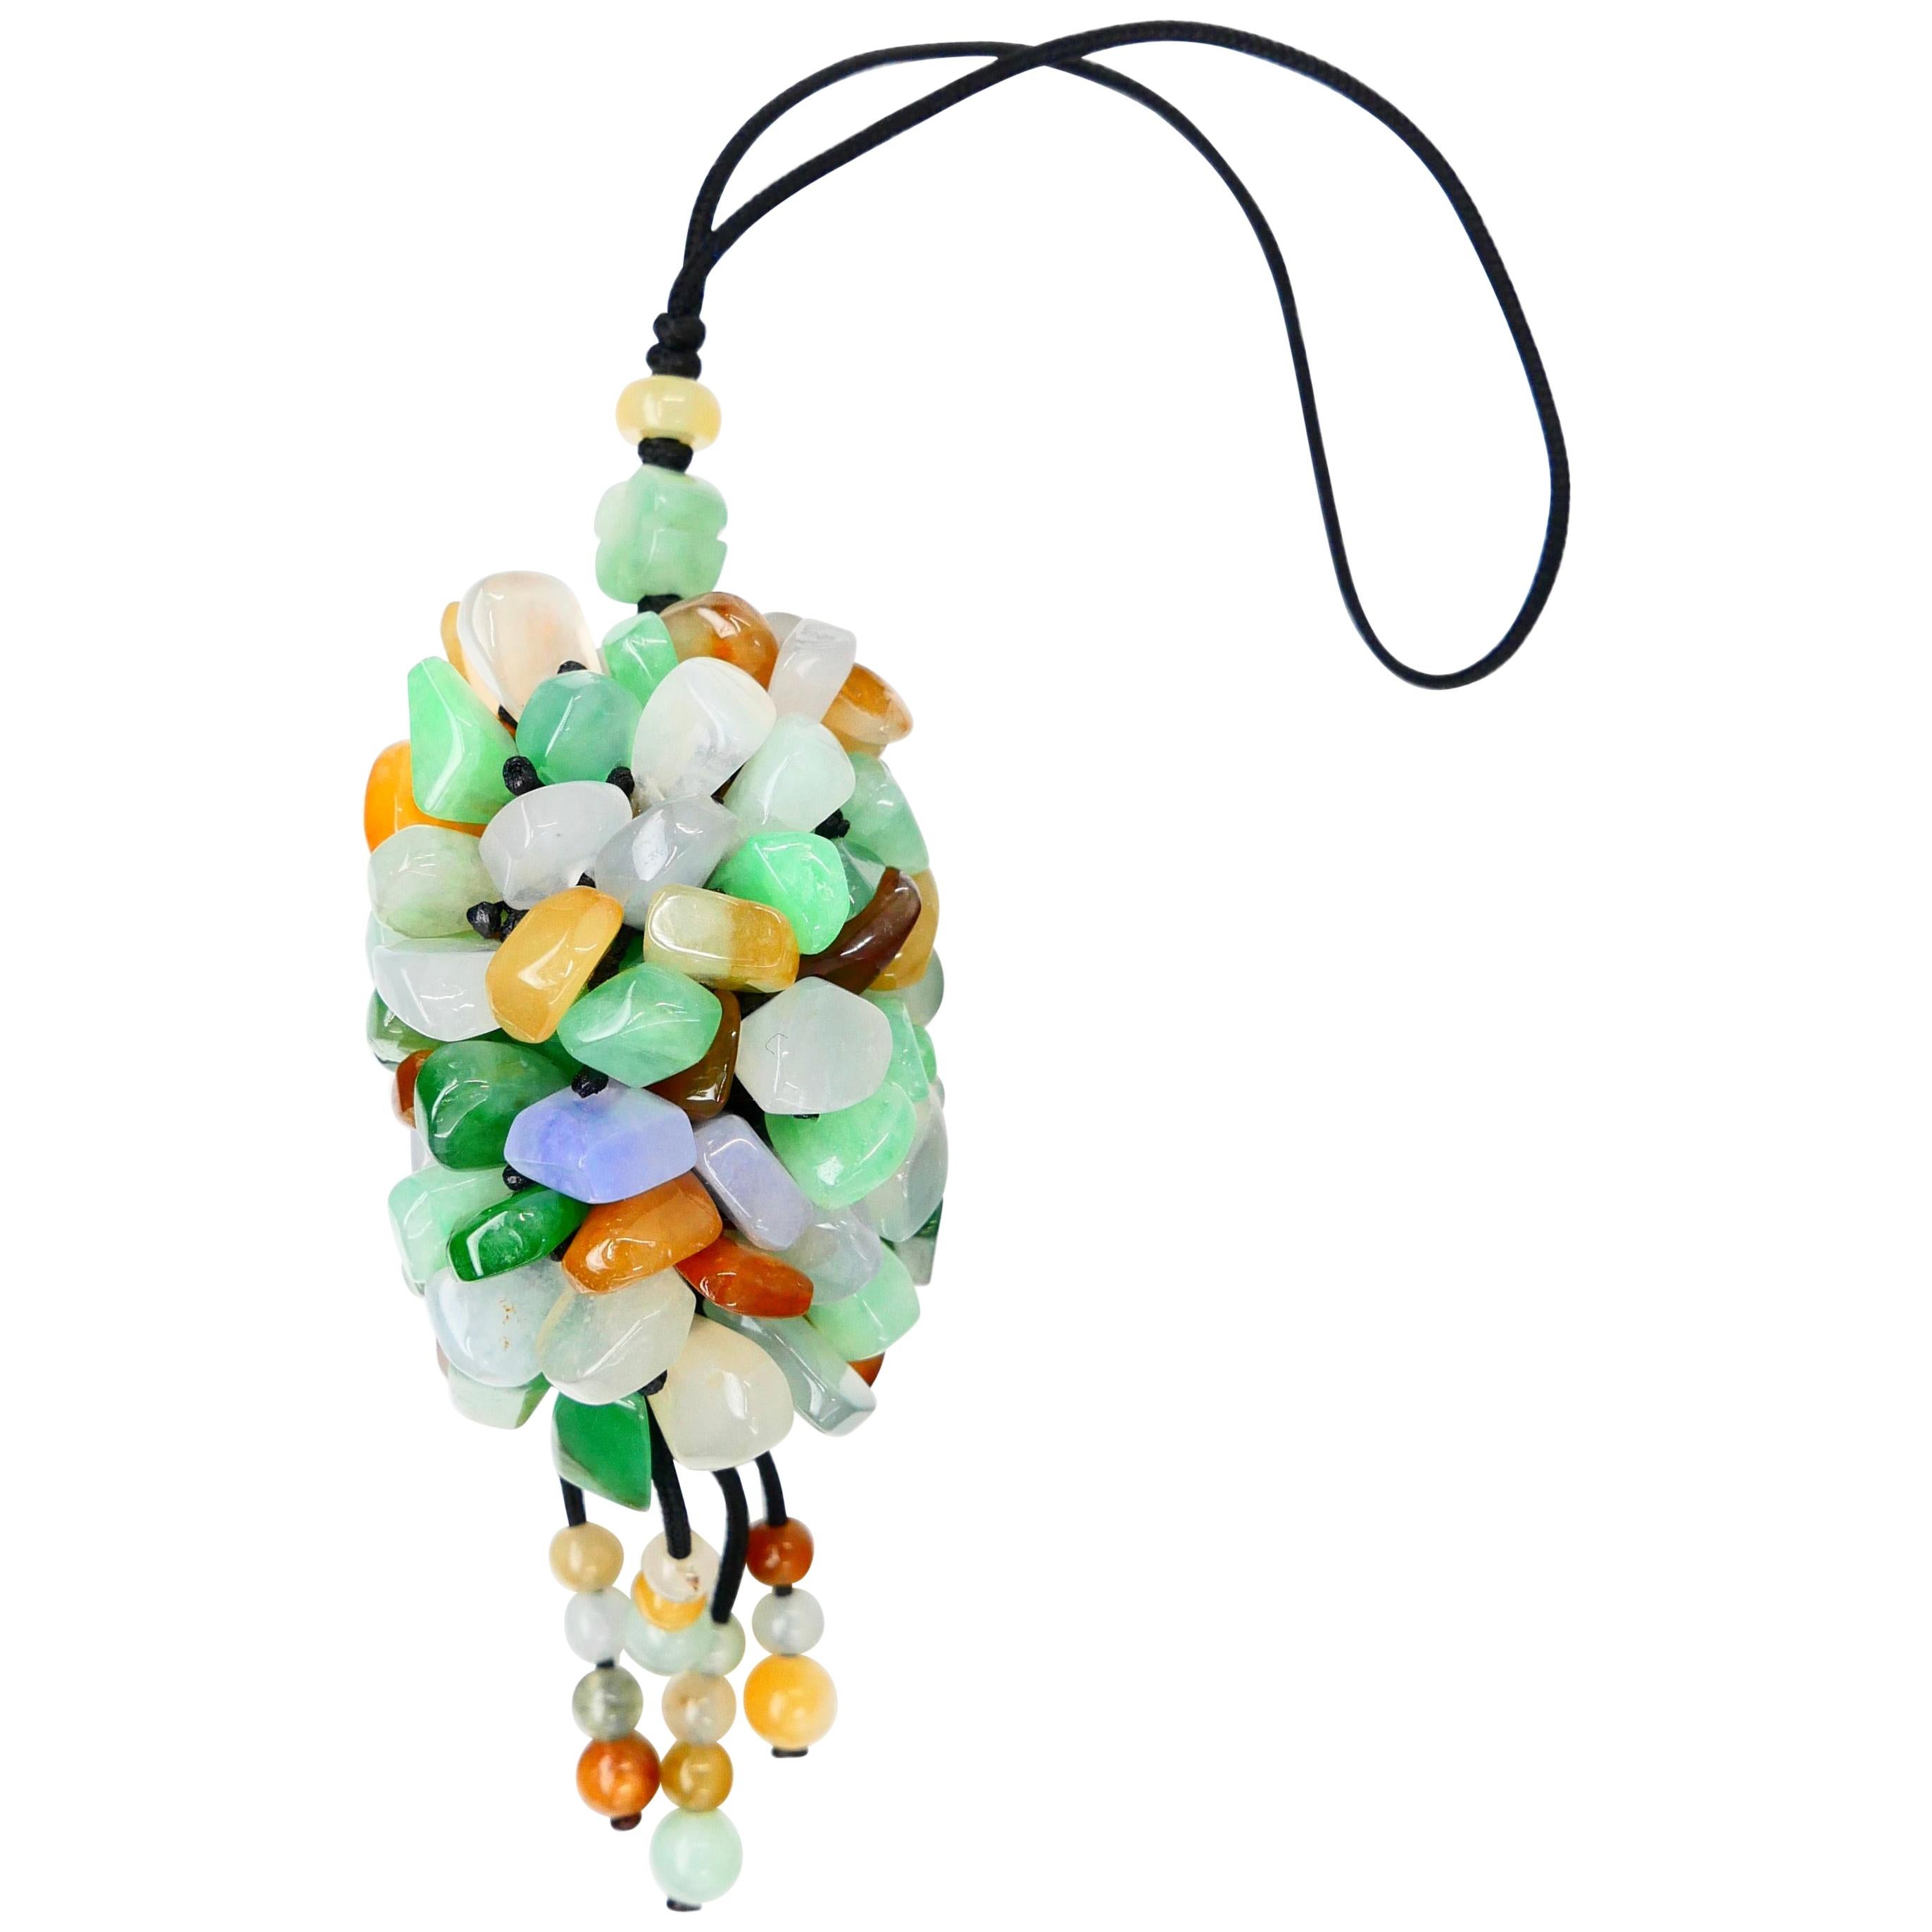 Certified Natural Jadeite Jade Drop Pendant Necklace, Handbag Charm, Apple Green For Sale